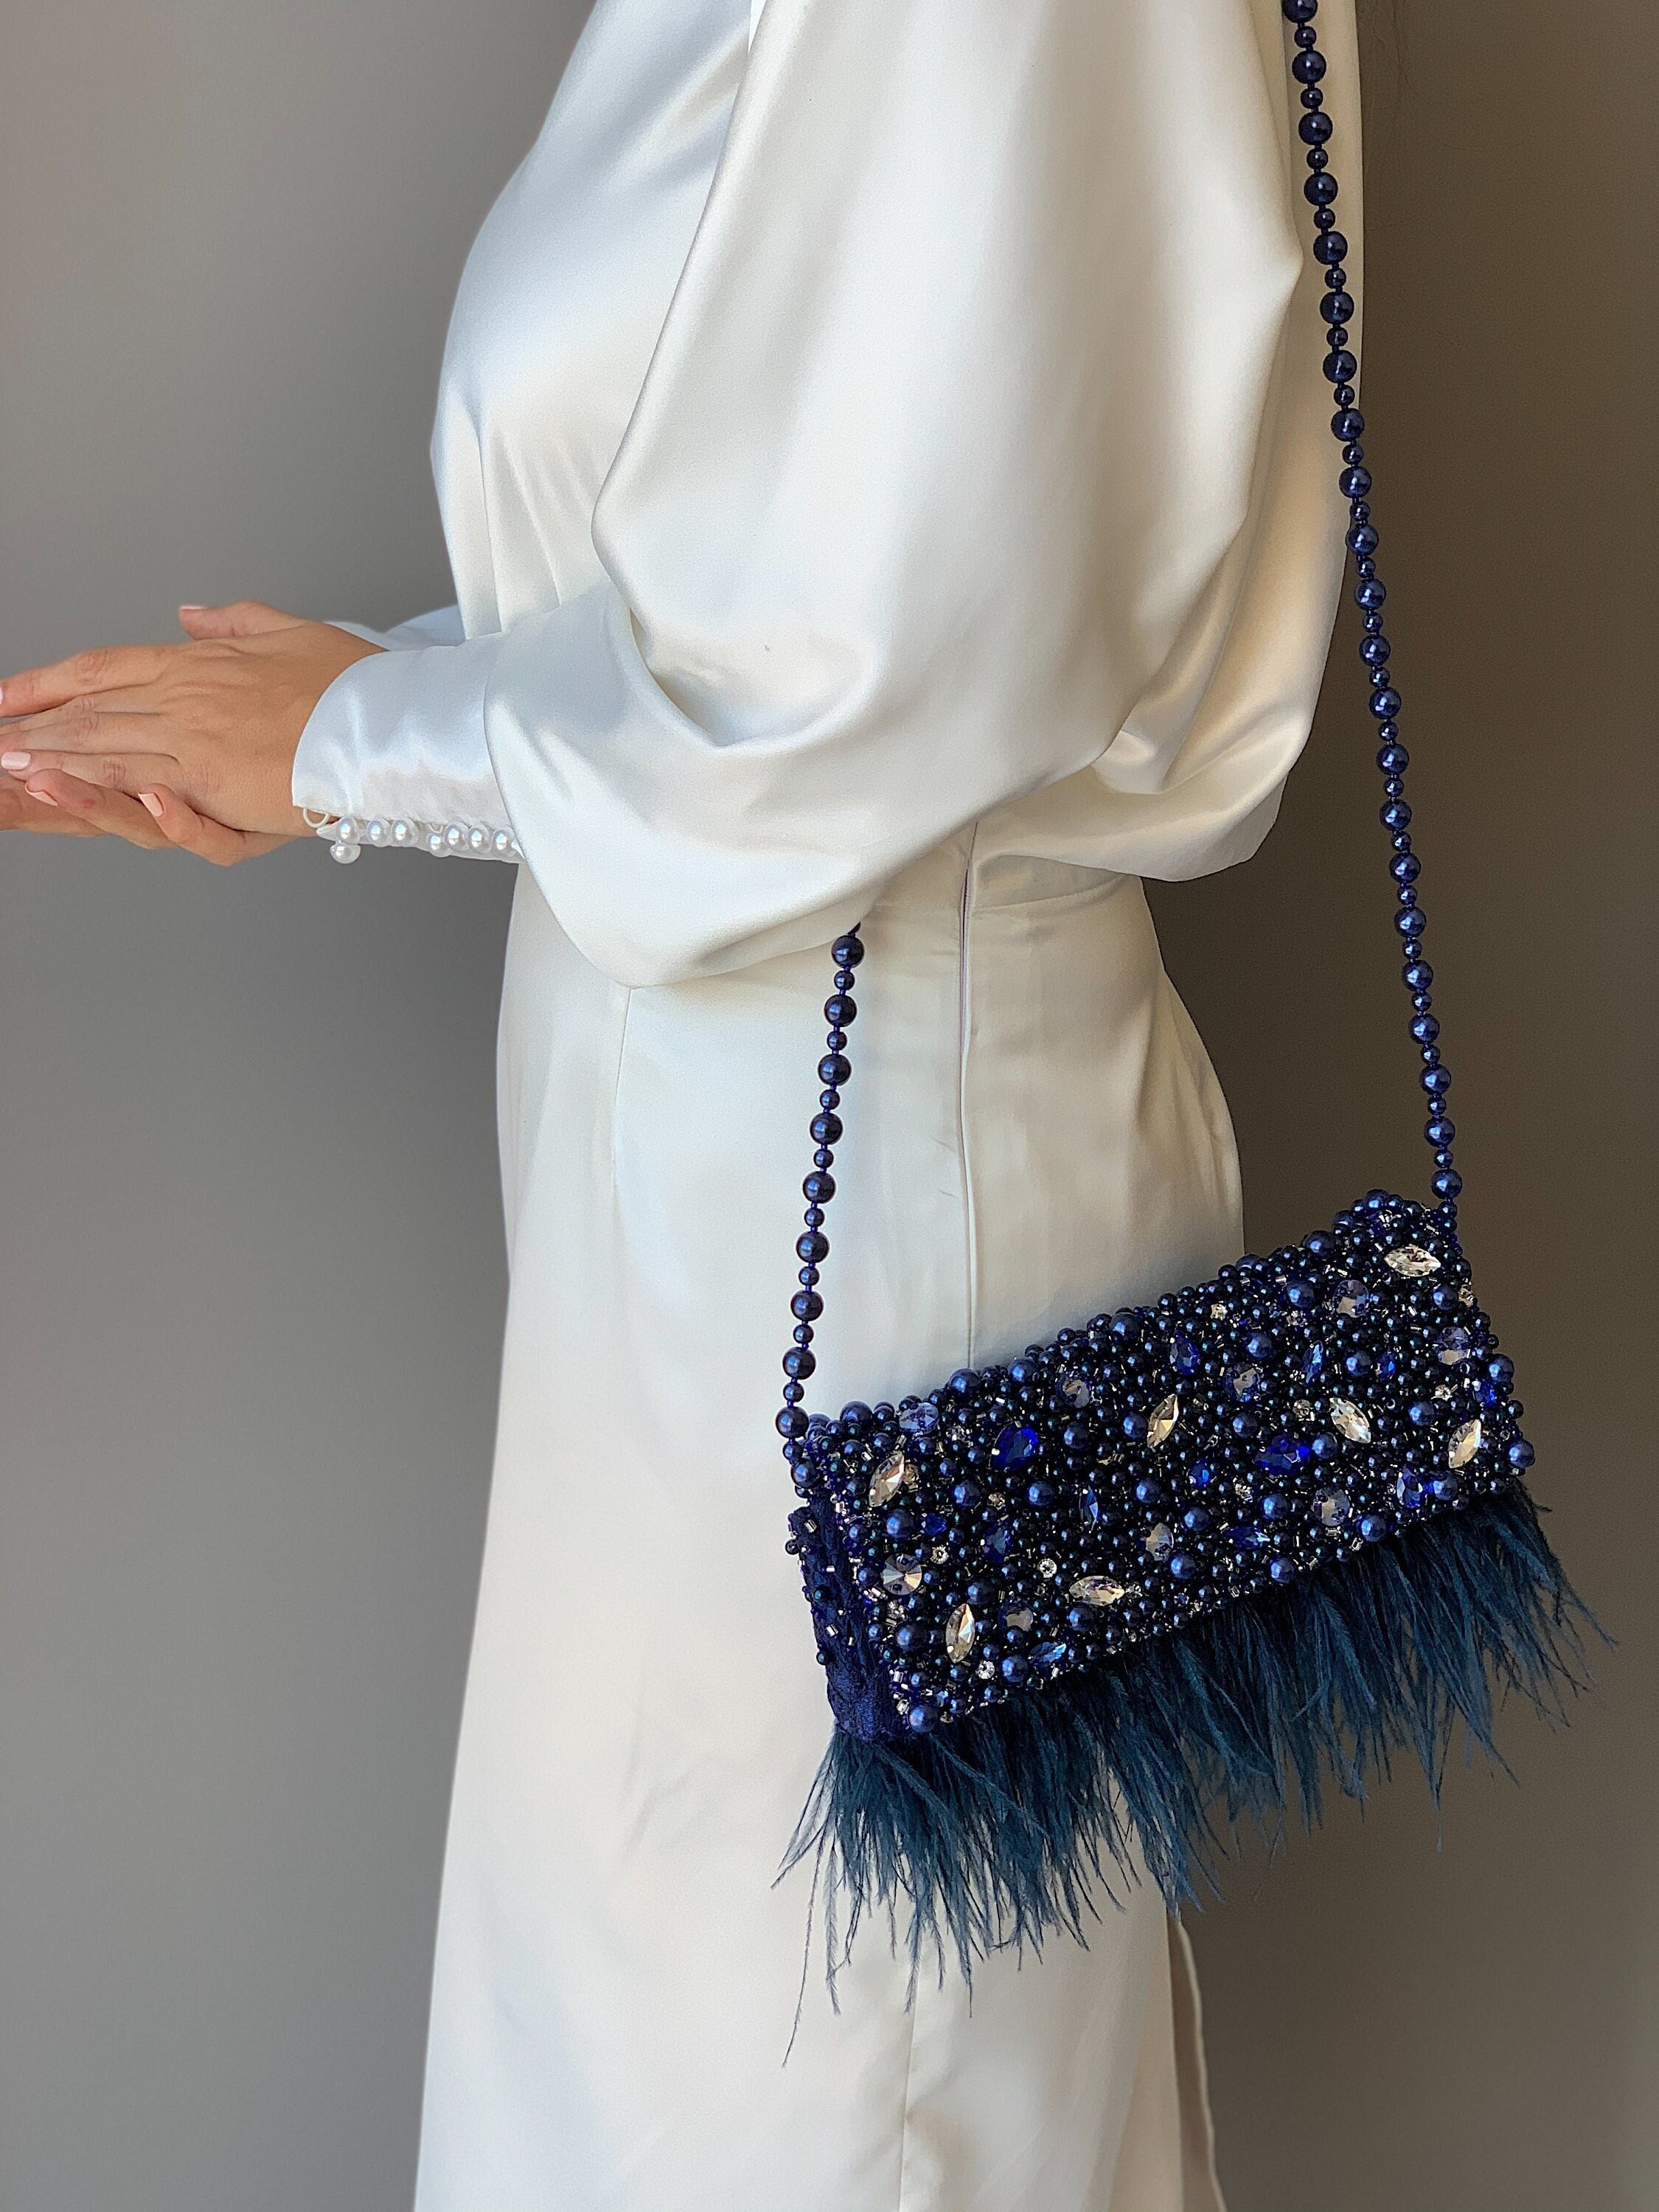 Luxury Rhinestone Evening Clutch Bag With Tassel Bling Box Shaped Handbag